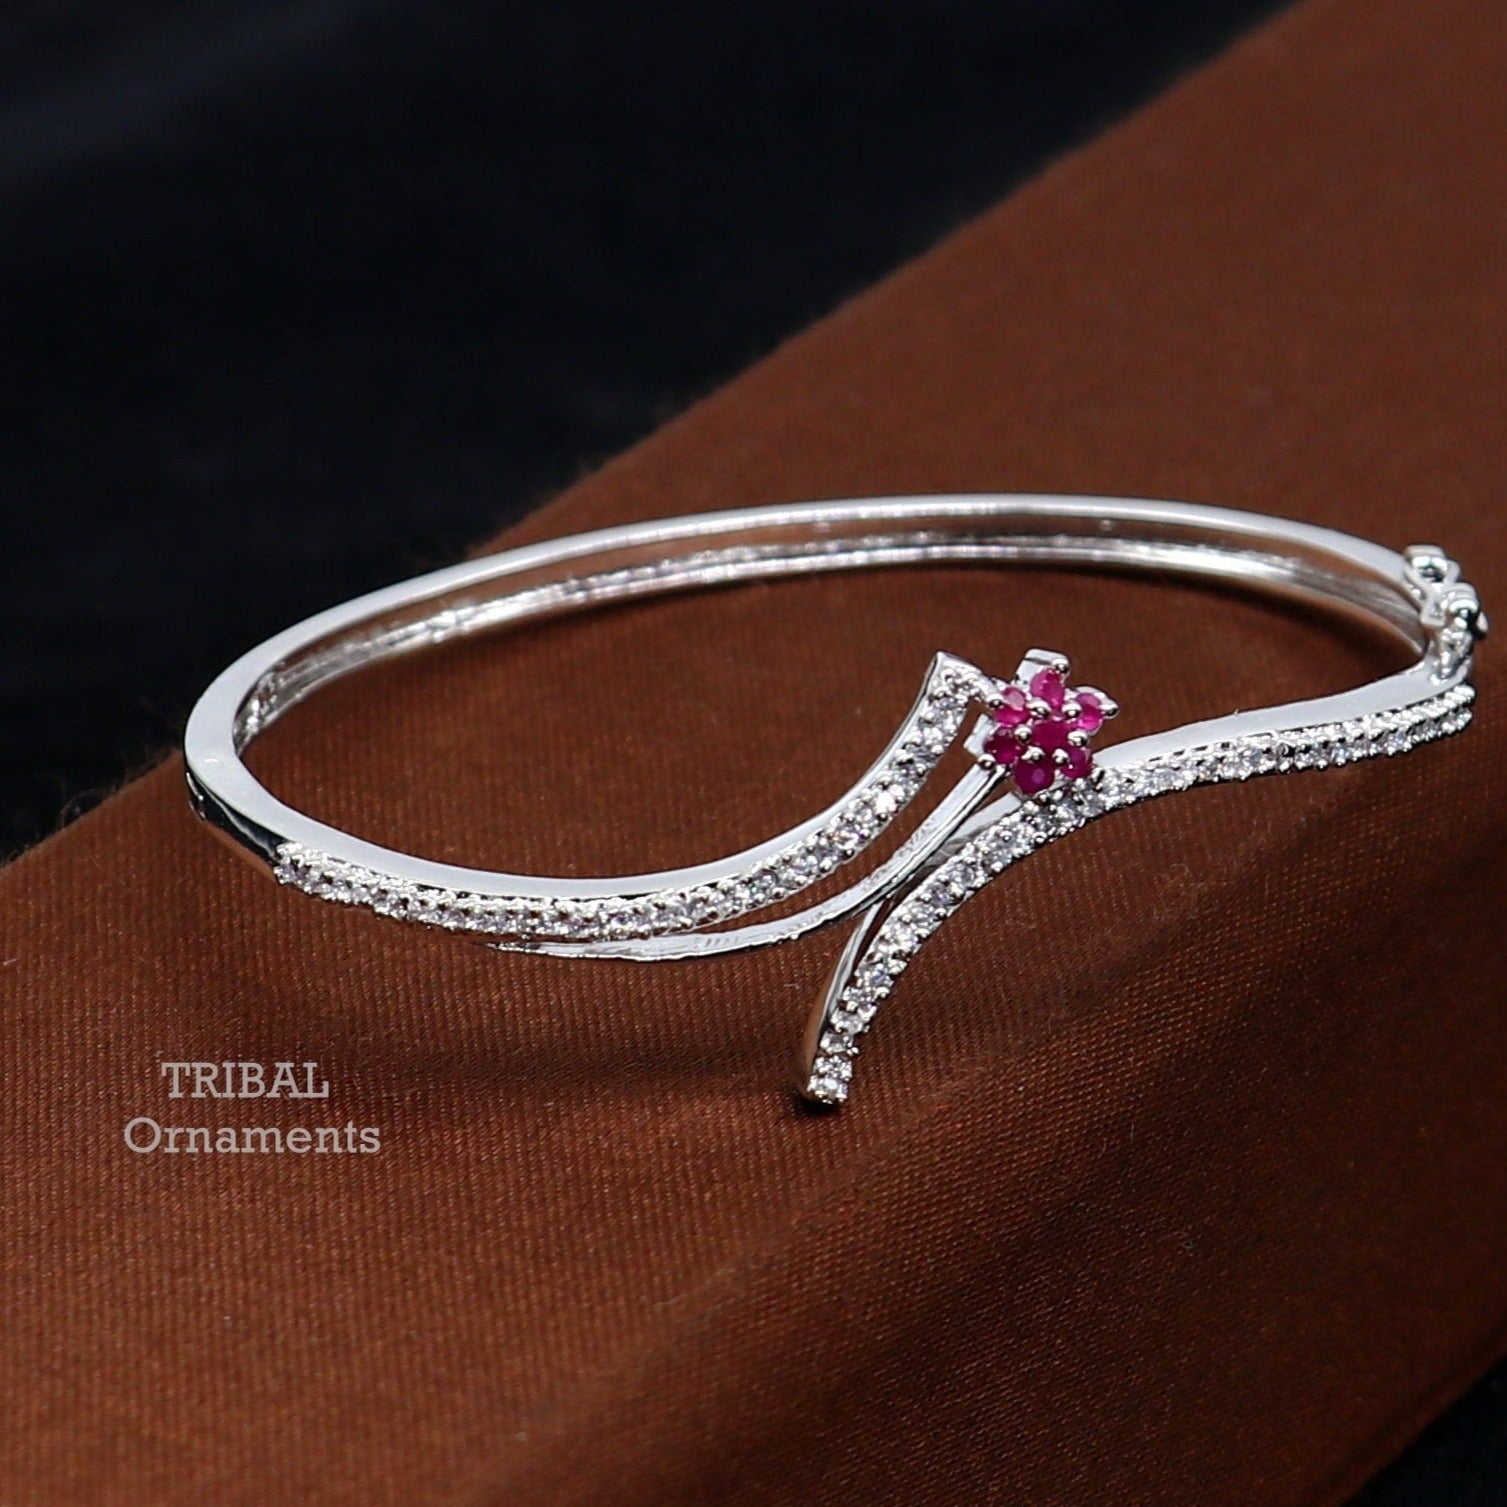 Buy Losa Women Heart Shape Crystal Open Cuff Bracelet Bangle Wristband  Jewelry Golden at Amazon.in